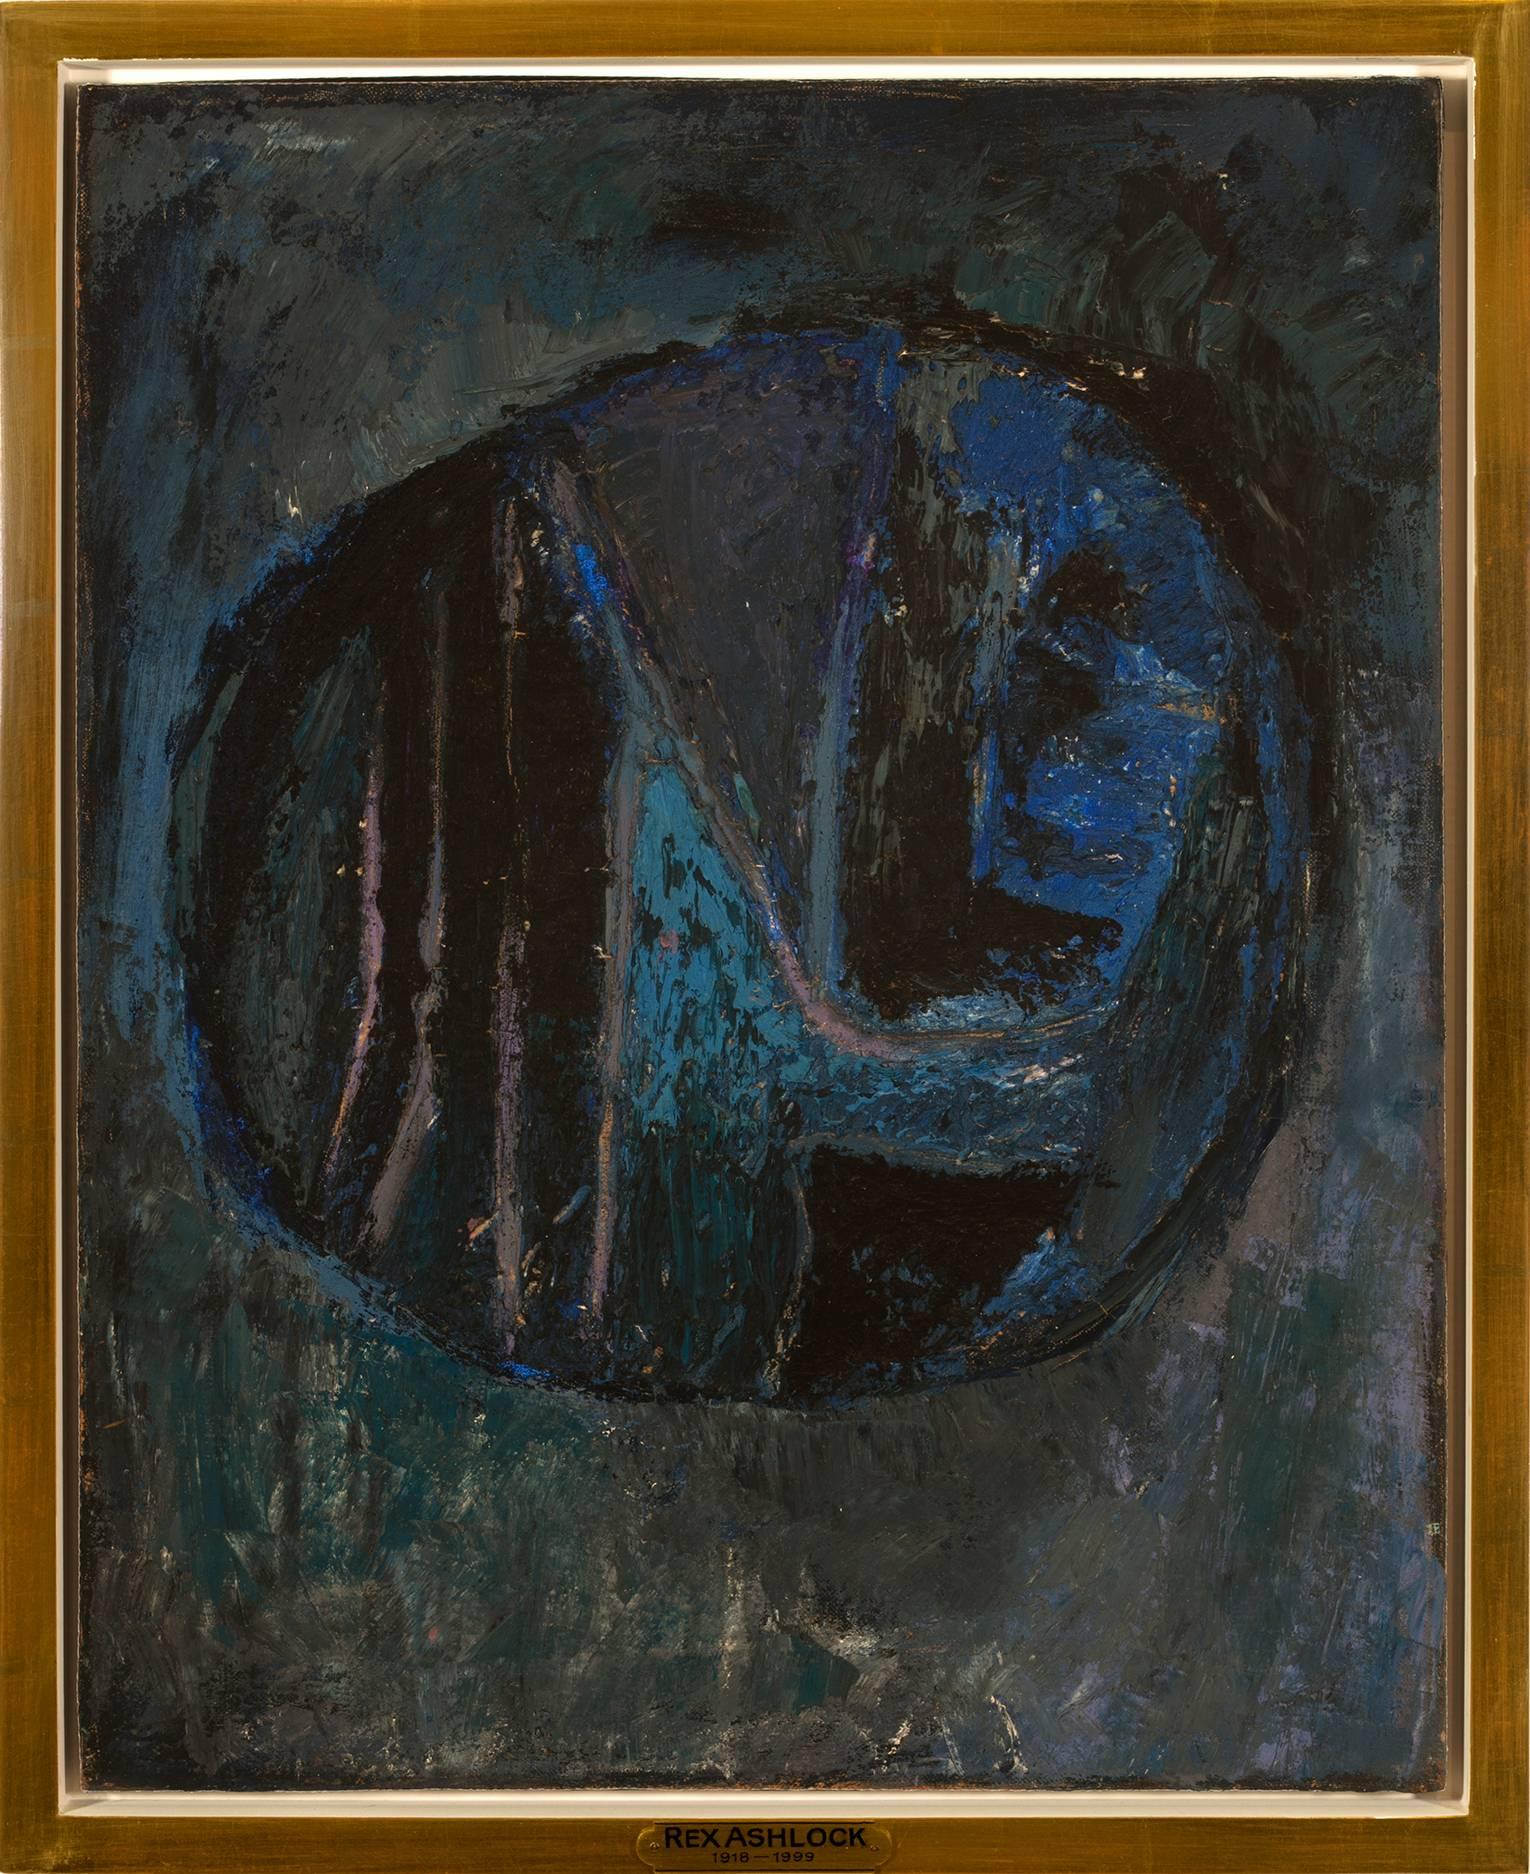 Rex Ashlock Abstract Painting - "Orb"